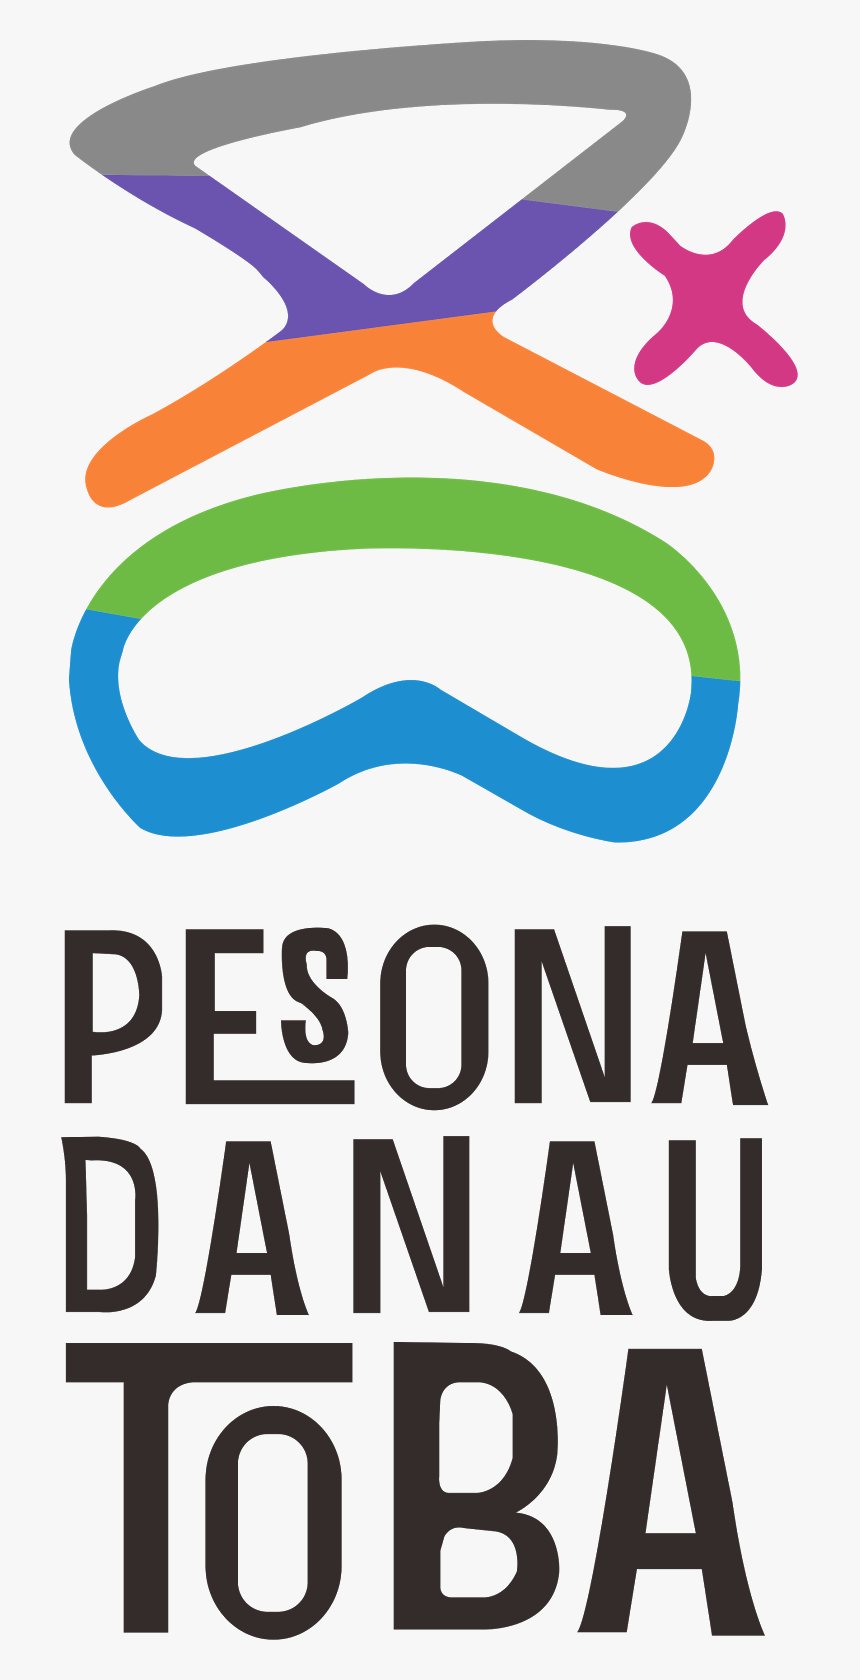 Checkered Vector Bendera - Logo Visit Danau Toba, HD Png Download, Free Download